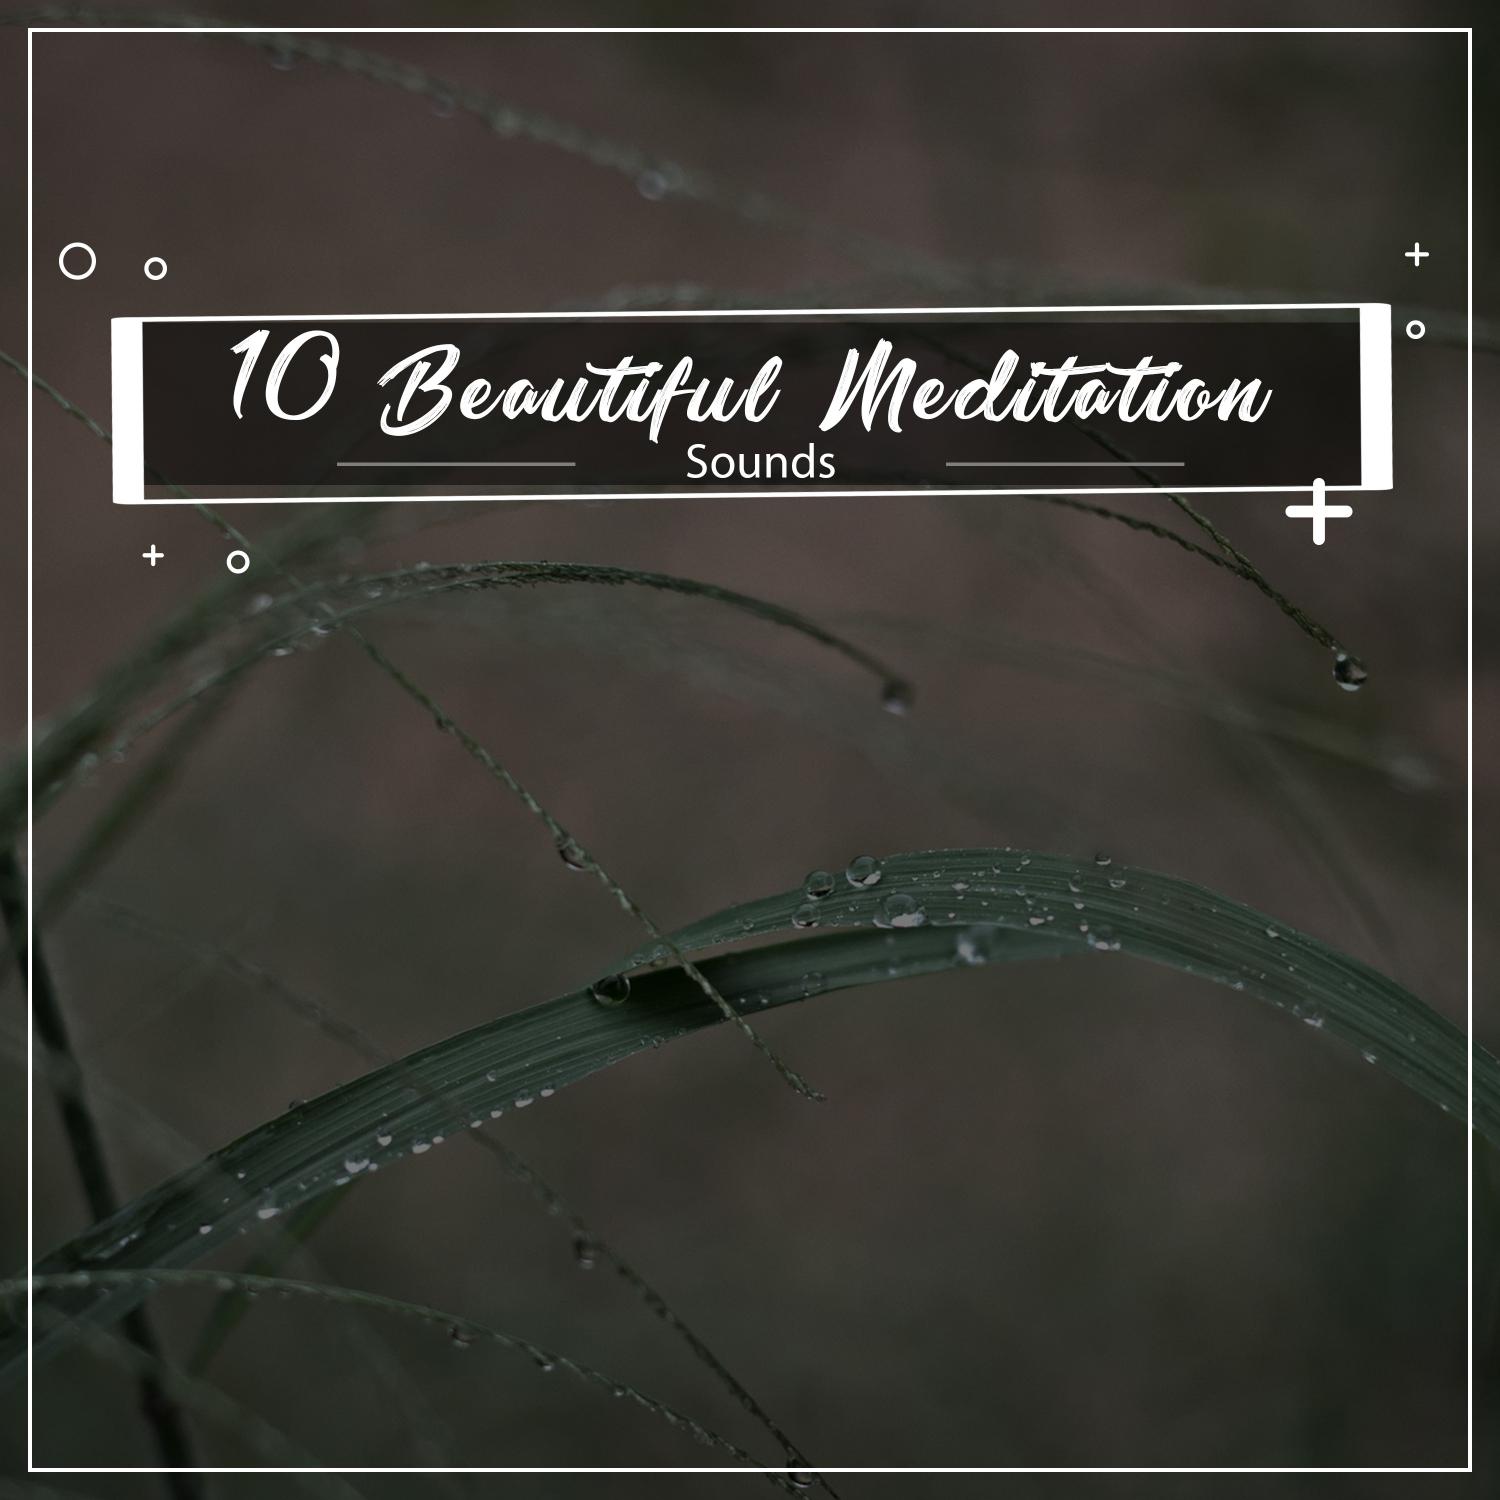 10 Beautiful Meditation Sounds - Nature and Rain Relaxation